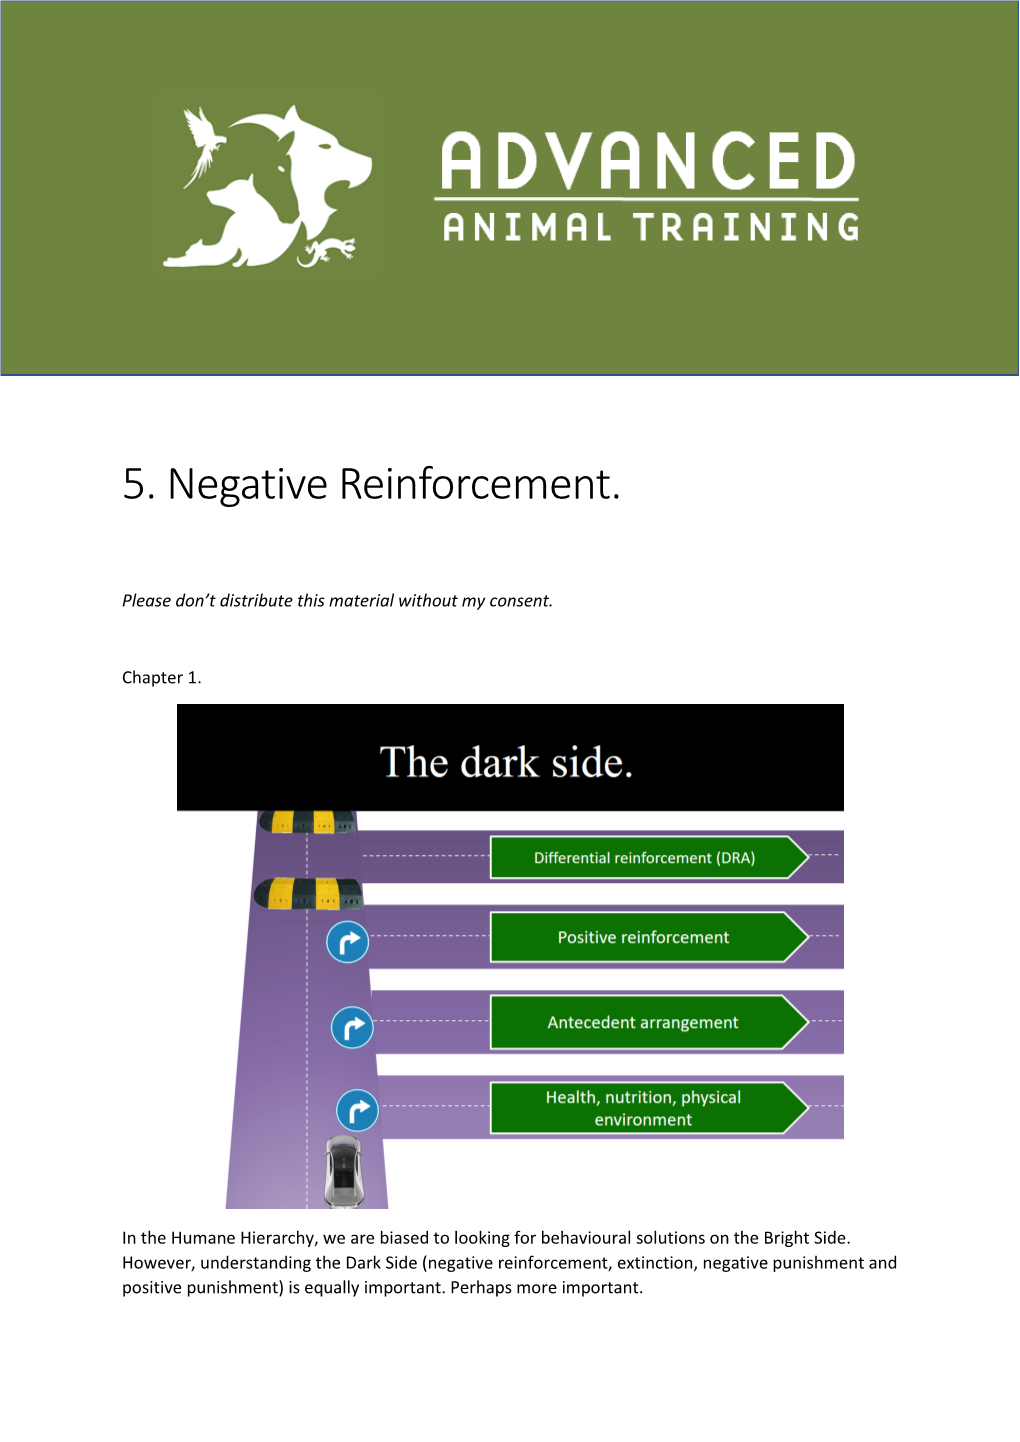 5. Negative Reinforcement